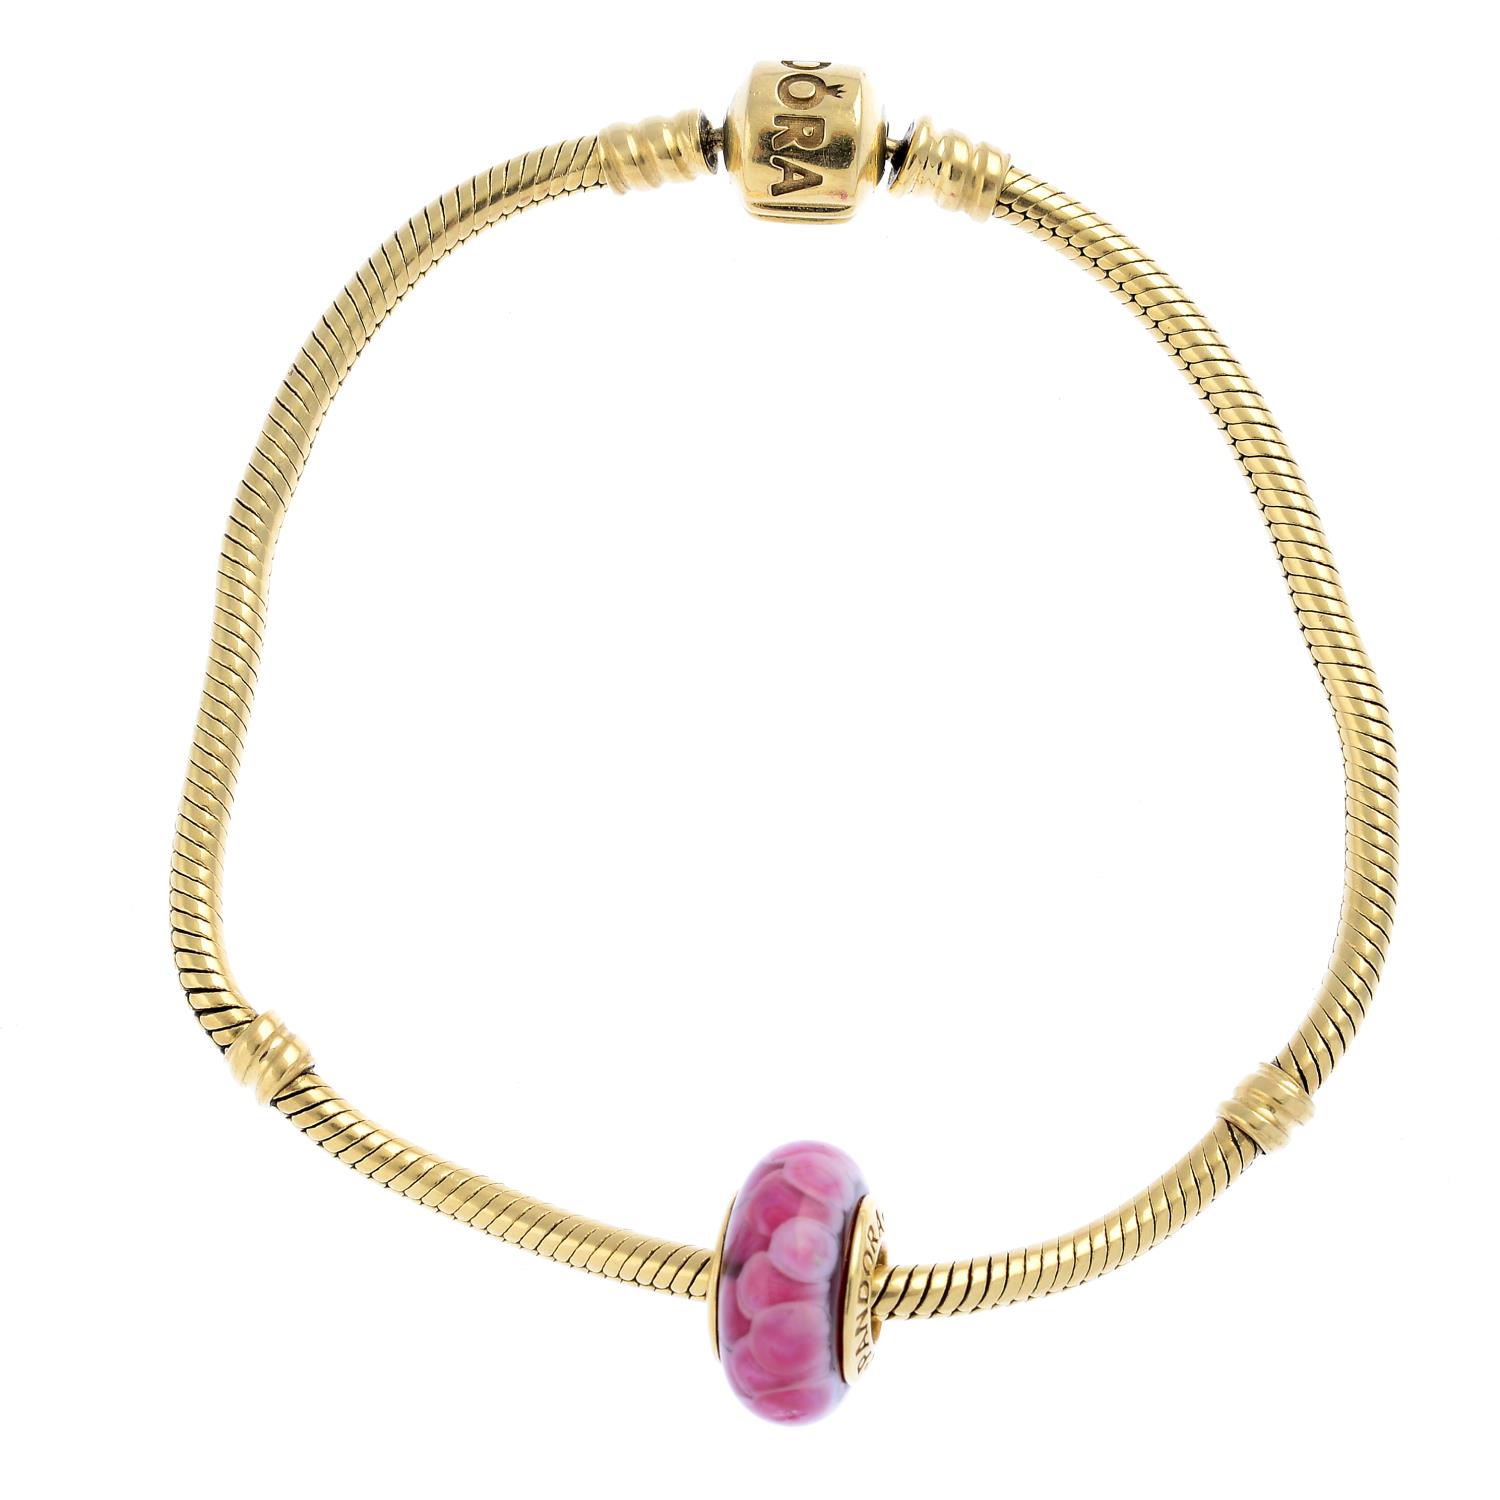 PANDORA - a bracelet and two charms.